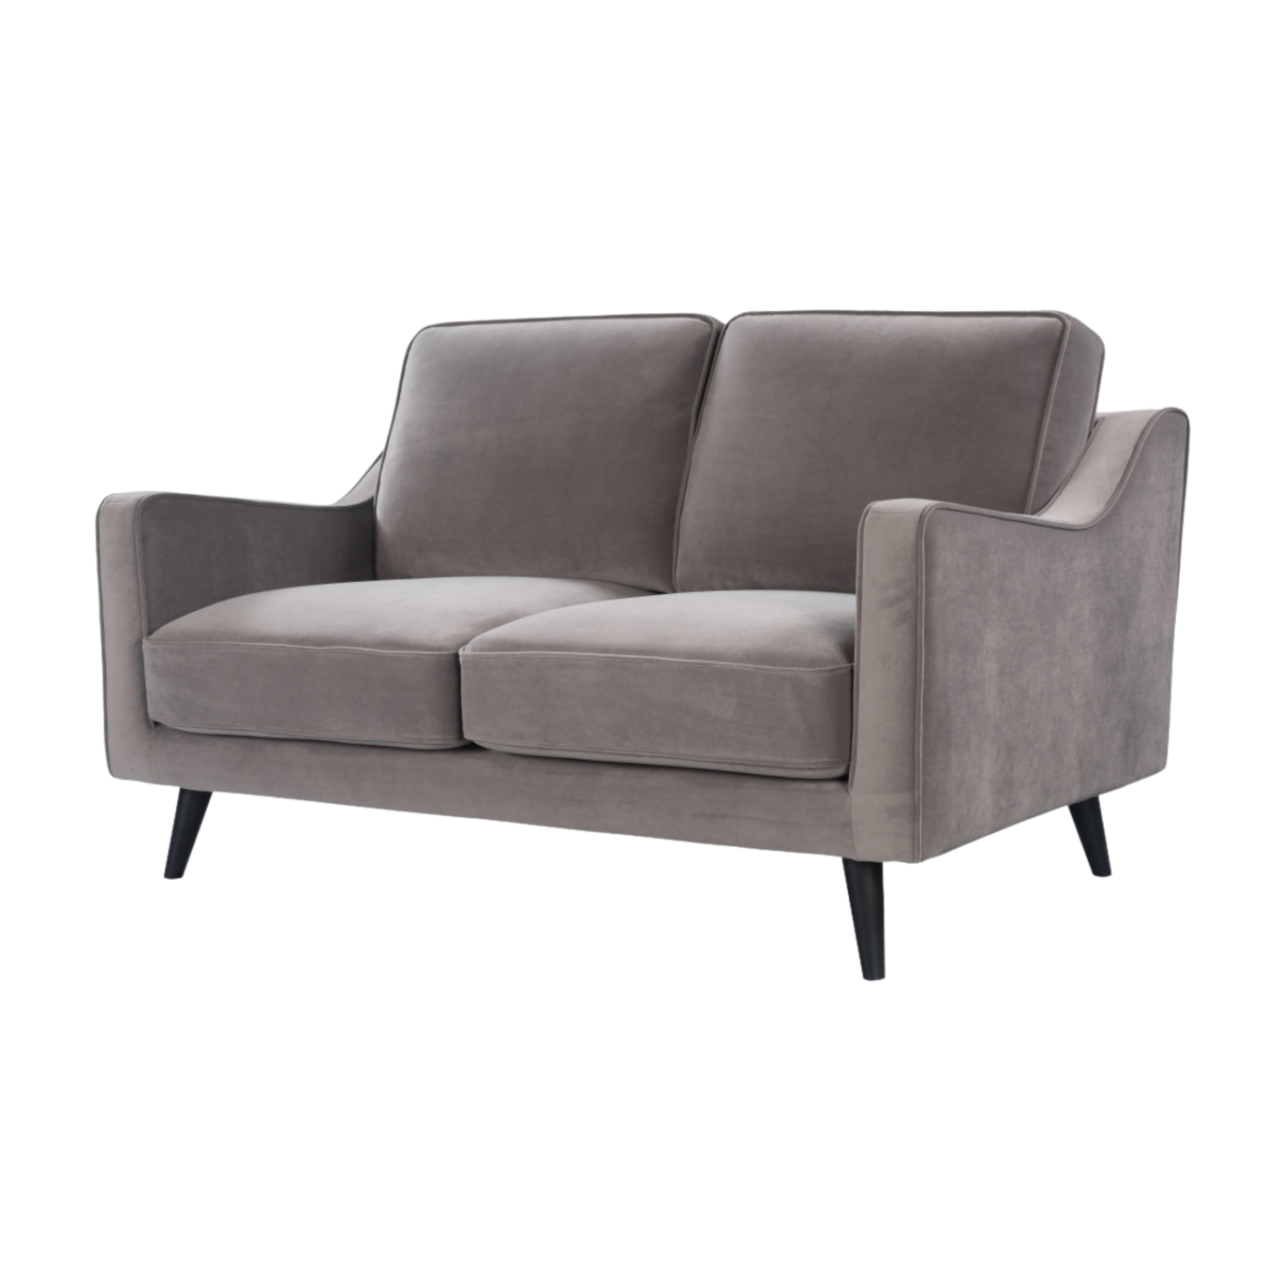 compact, modern 2 seater sofa in grey velvetcompact, modern 2 seater sofa in grey velvet